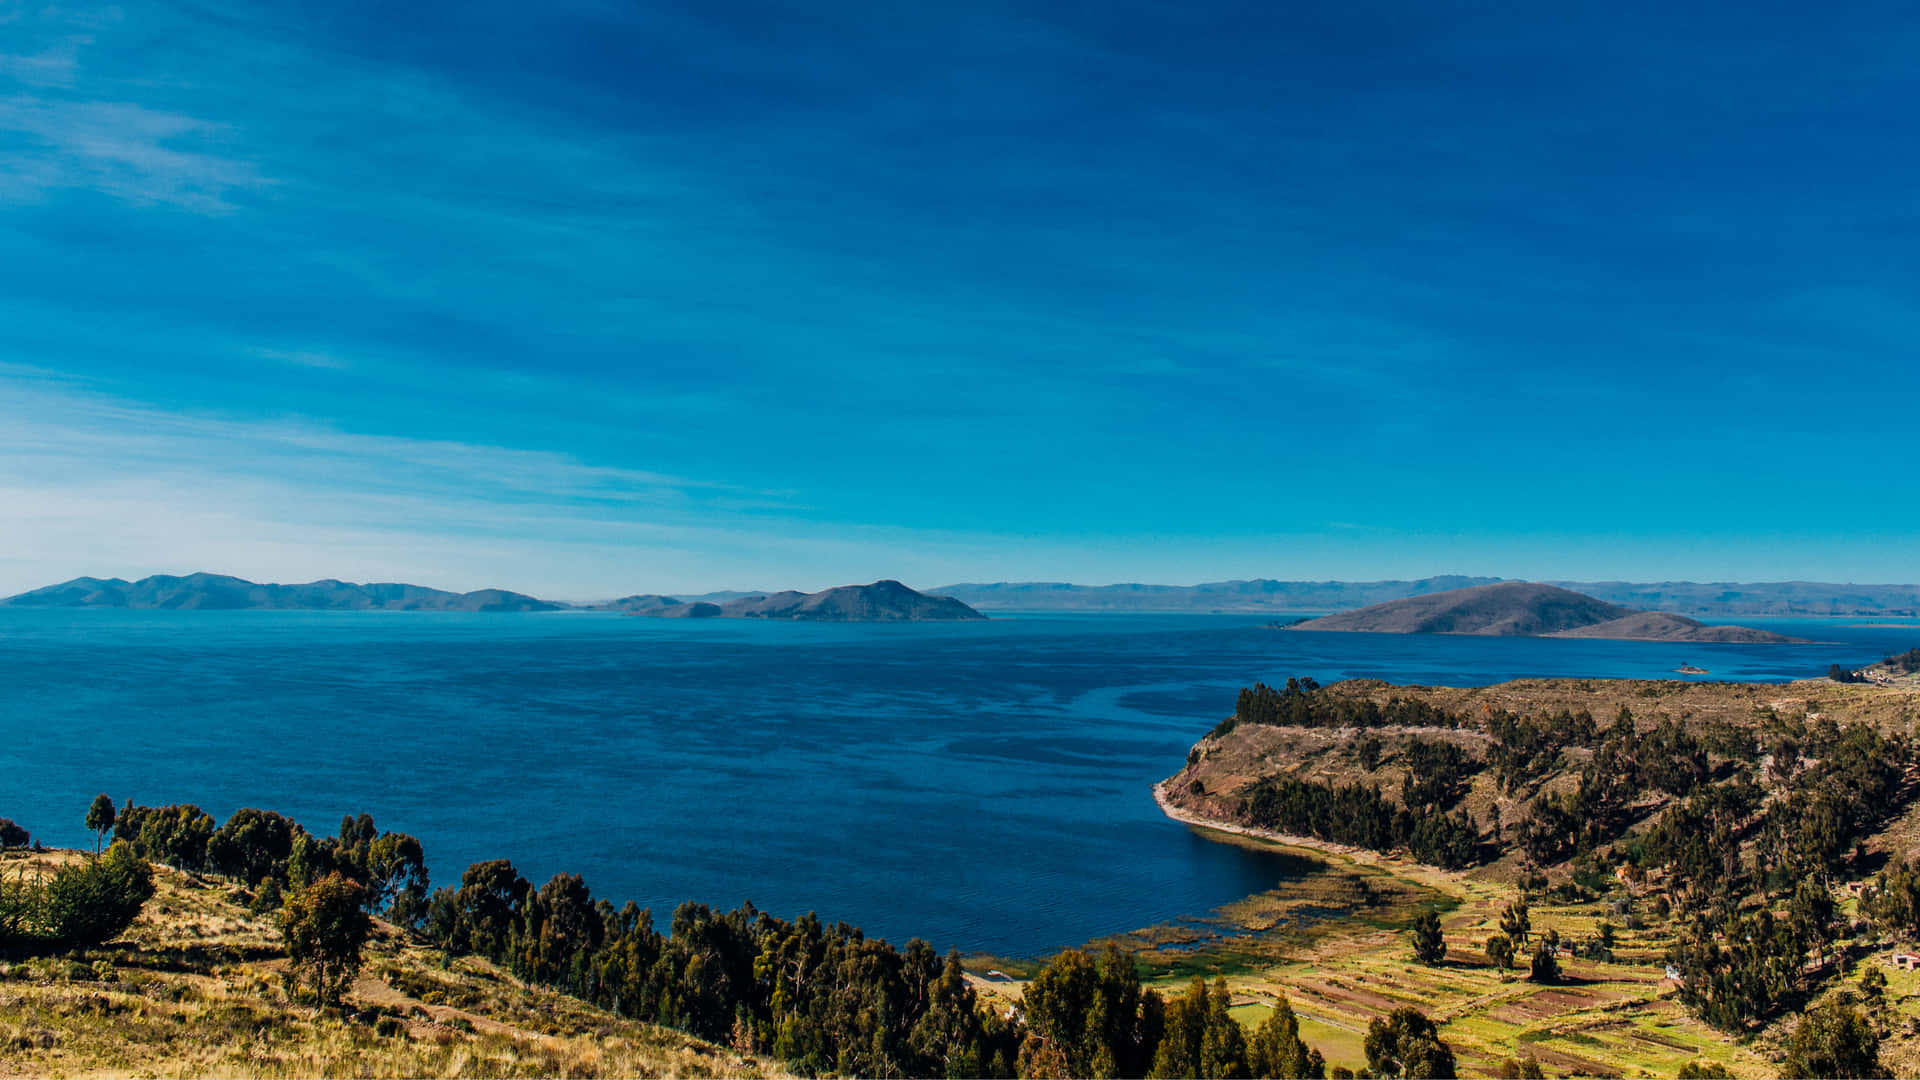 Bolivian Shores of Lake Titicaca Wallpaper